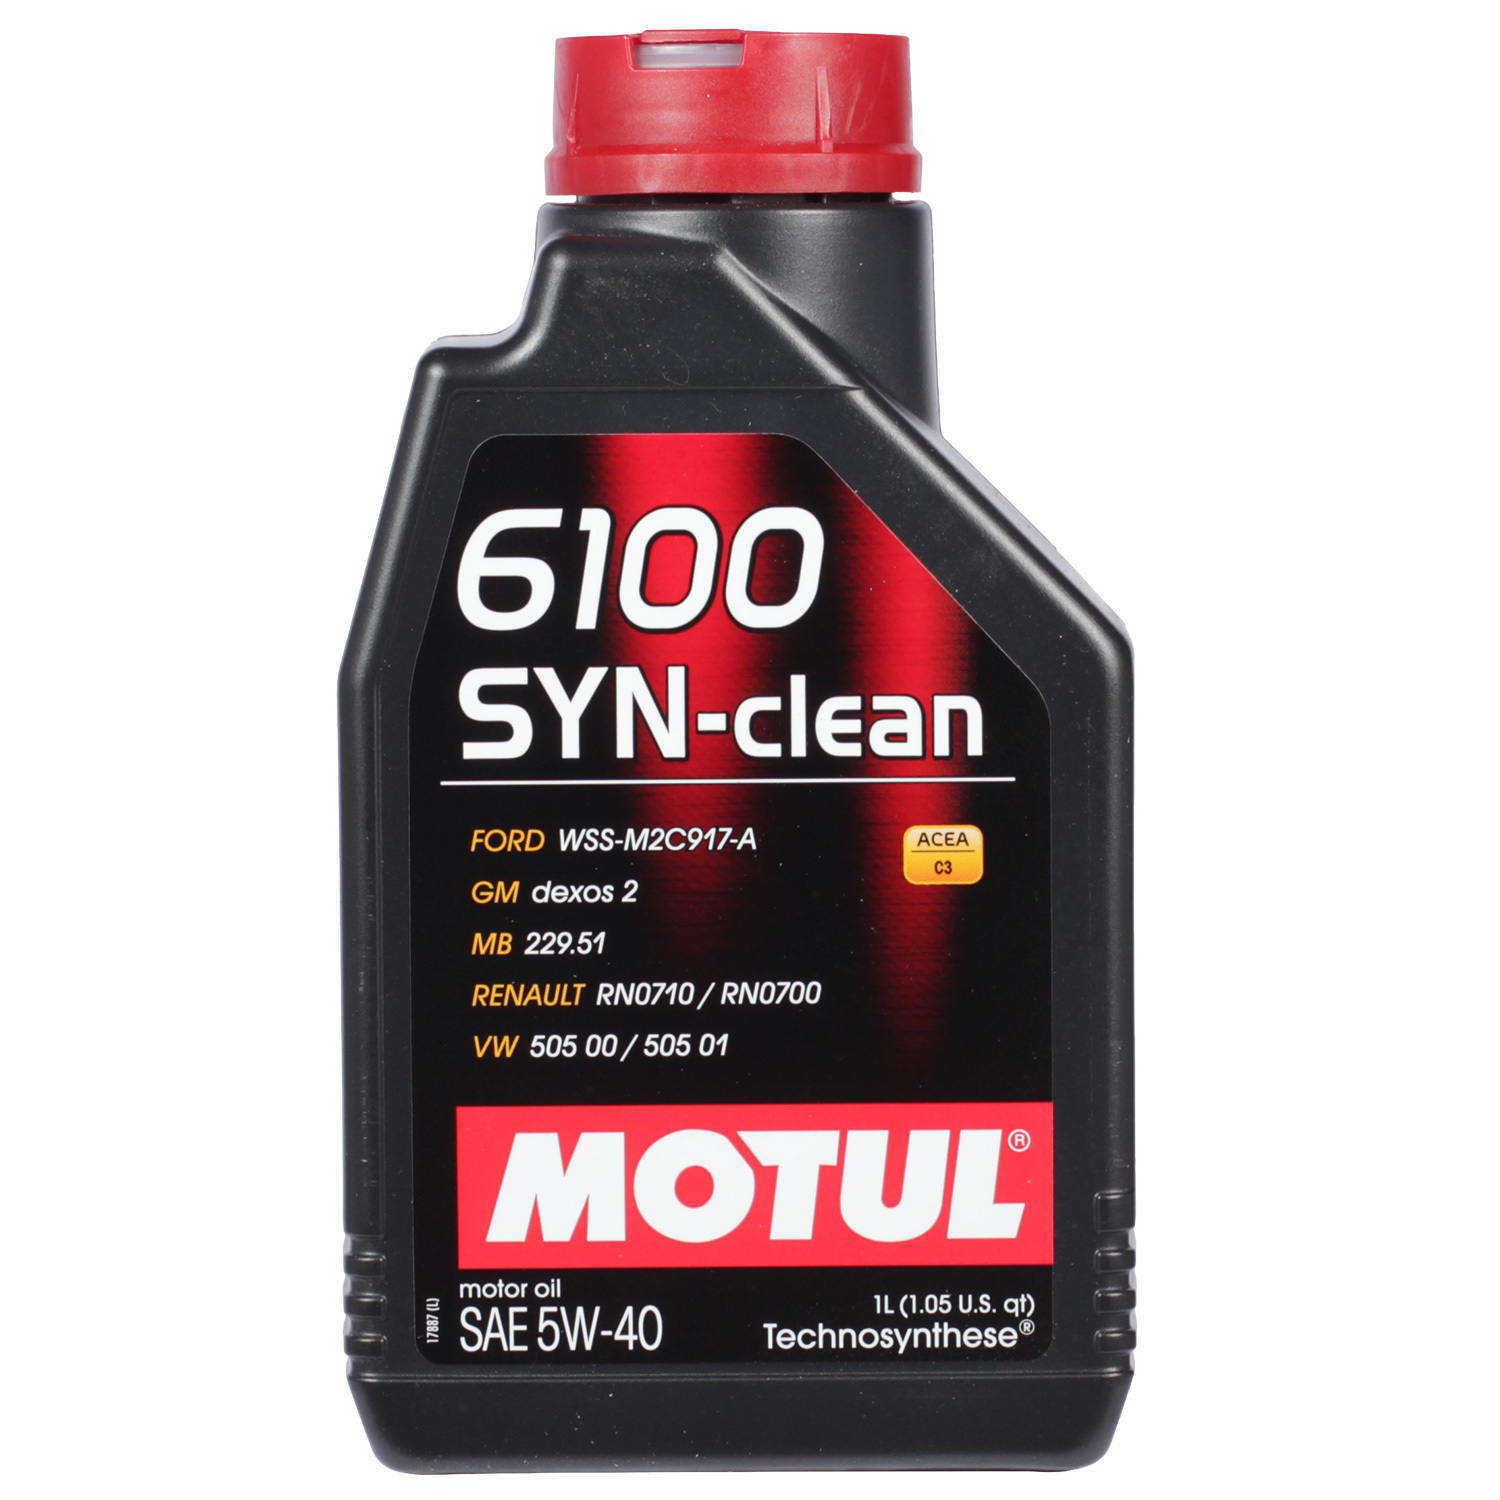 Motul Моторное масло Motul 6100 SYN-CLEAN 5W-40, 1 л цена и фото